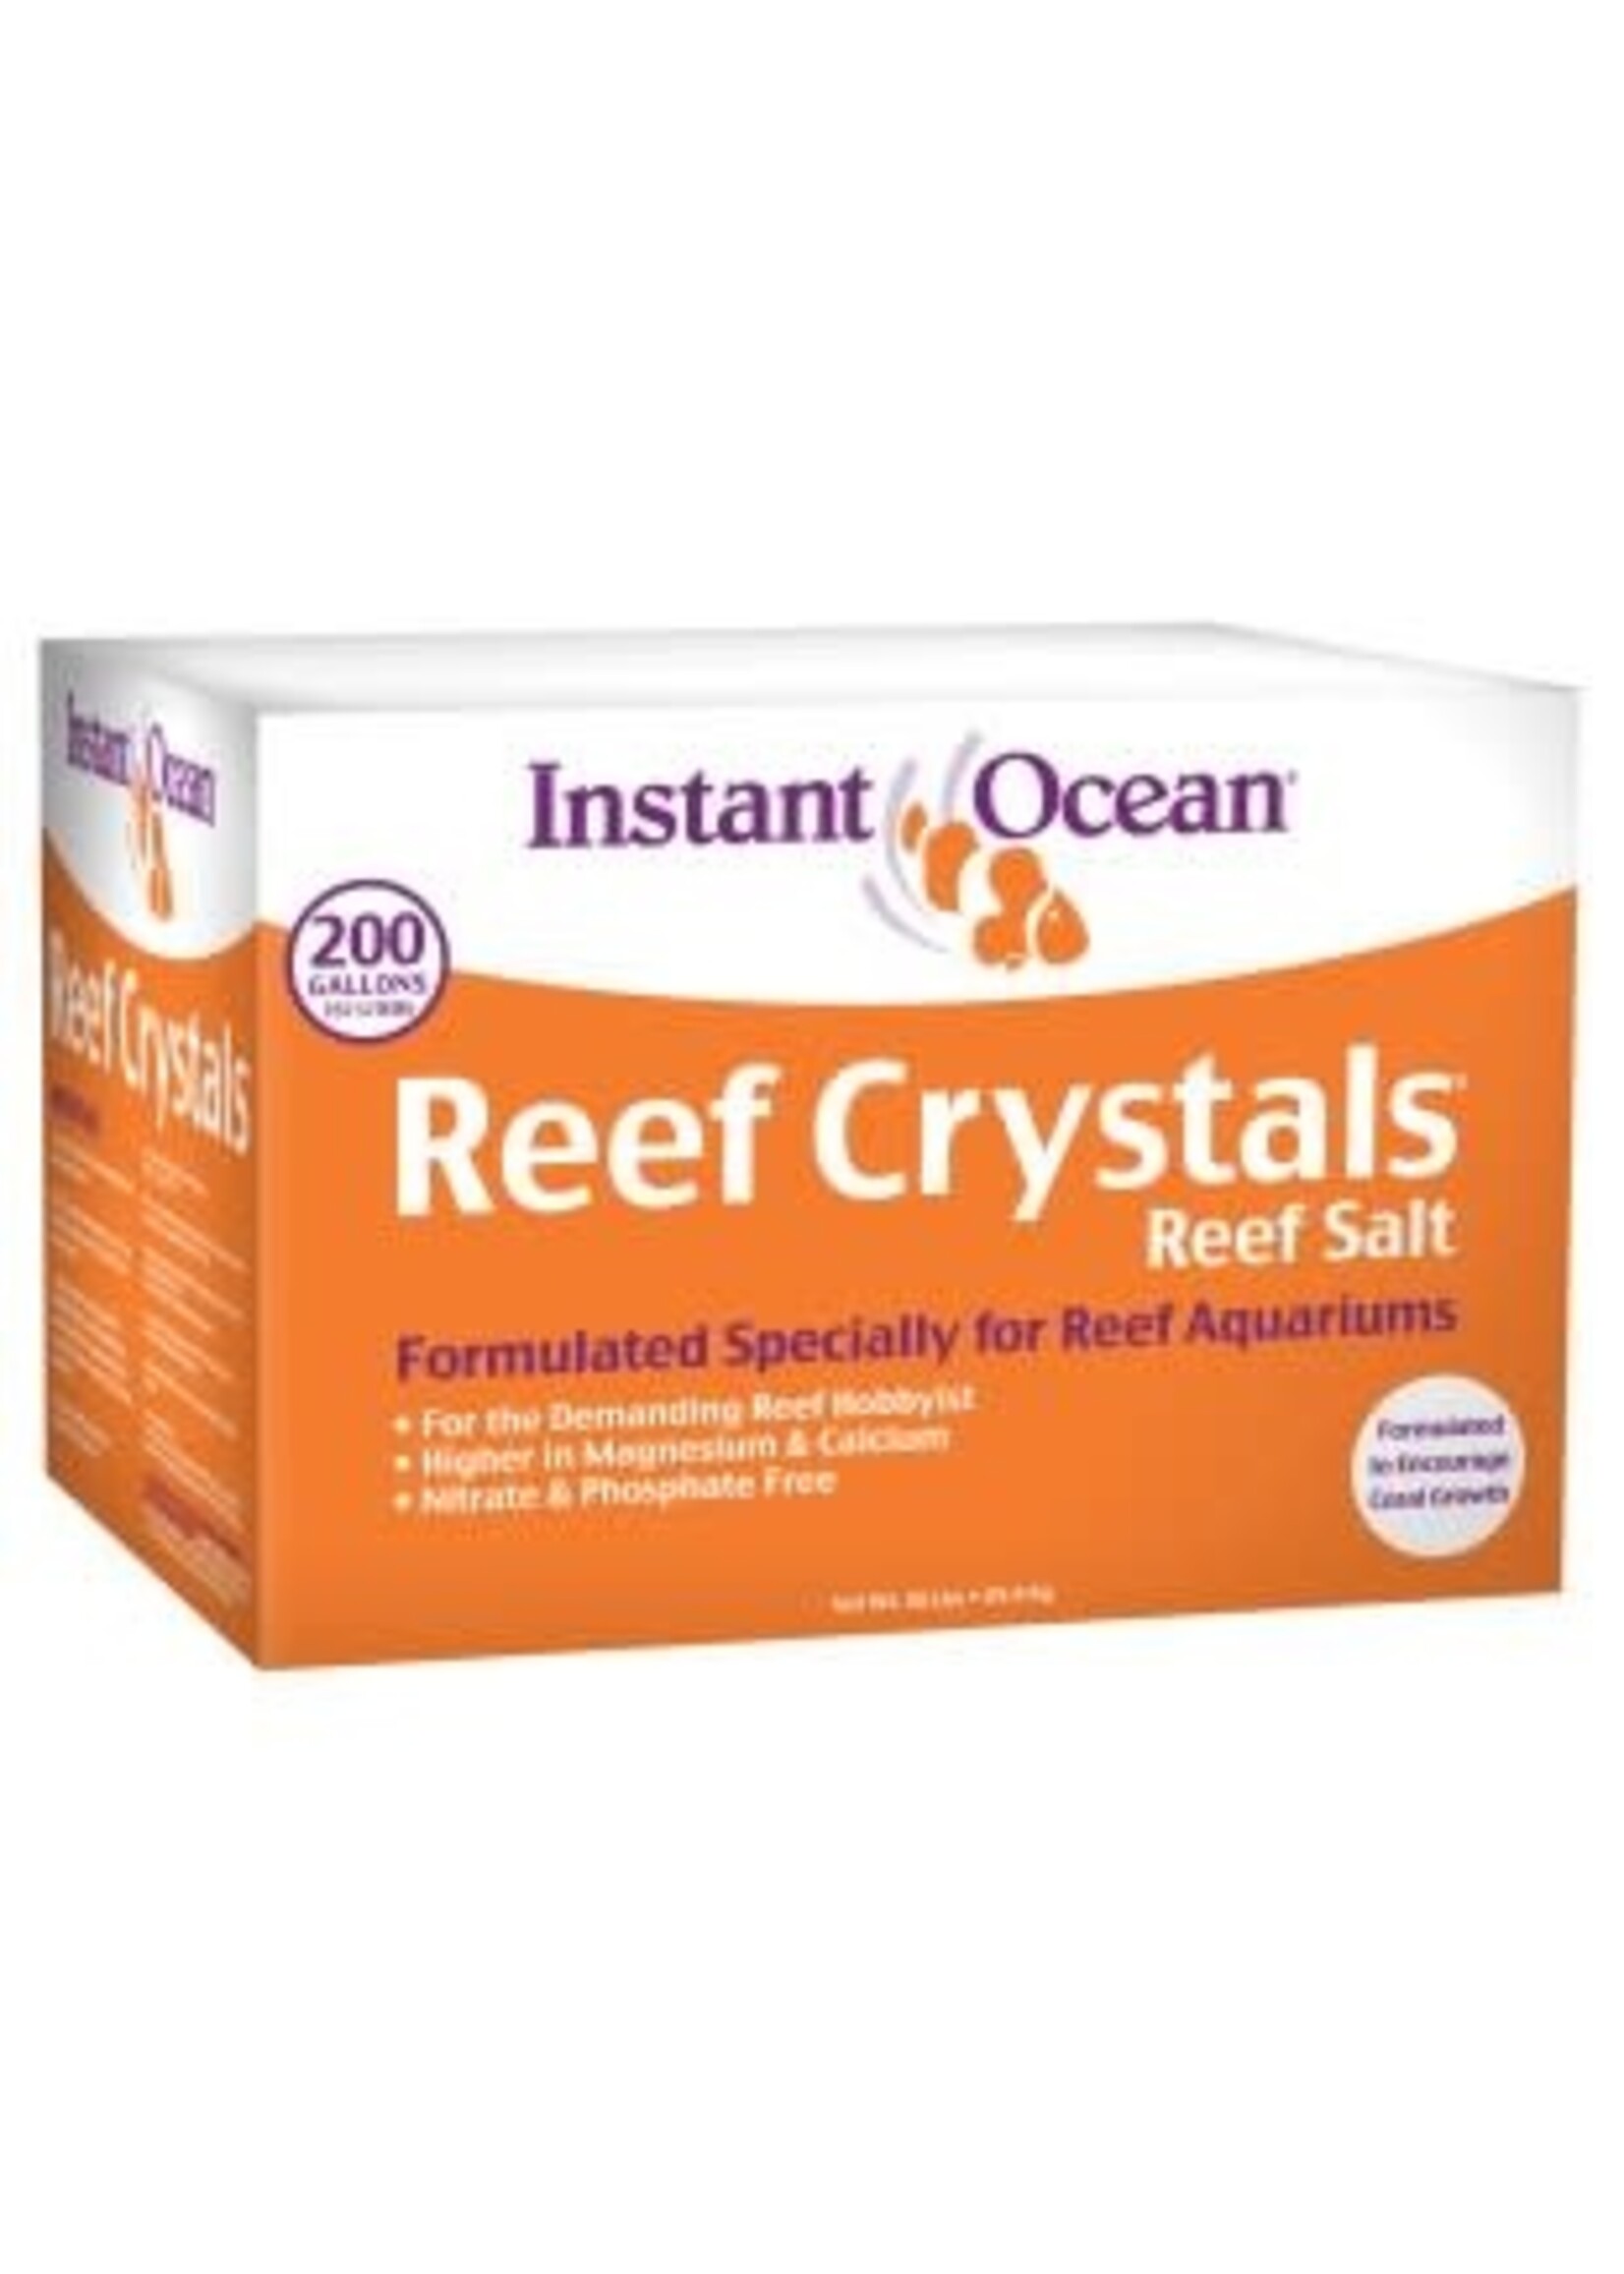 Instant Ocean Instant Ocean Reef Crystals Reef Salt